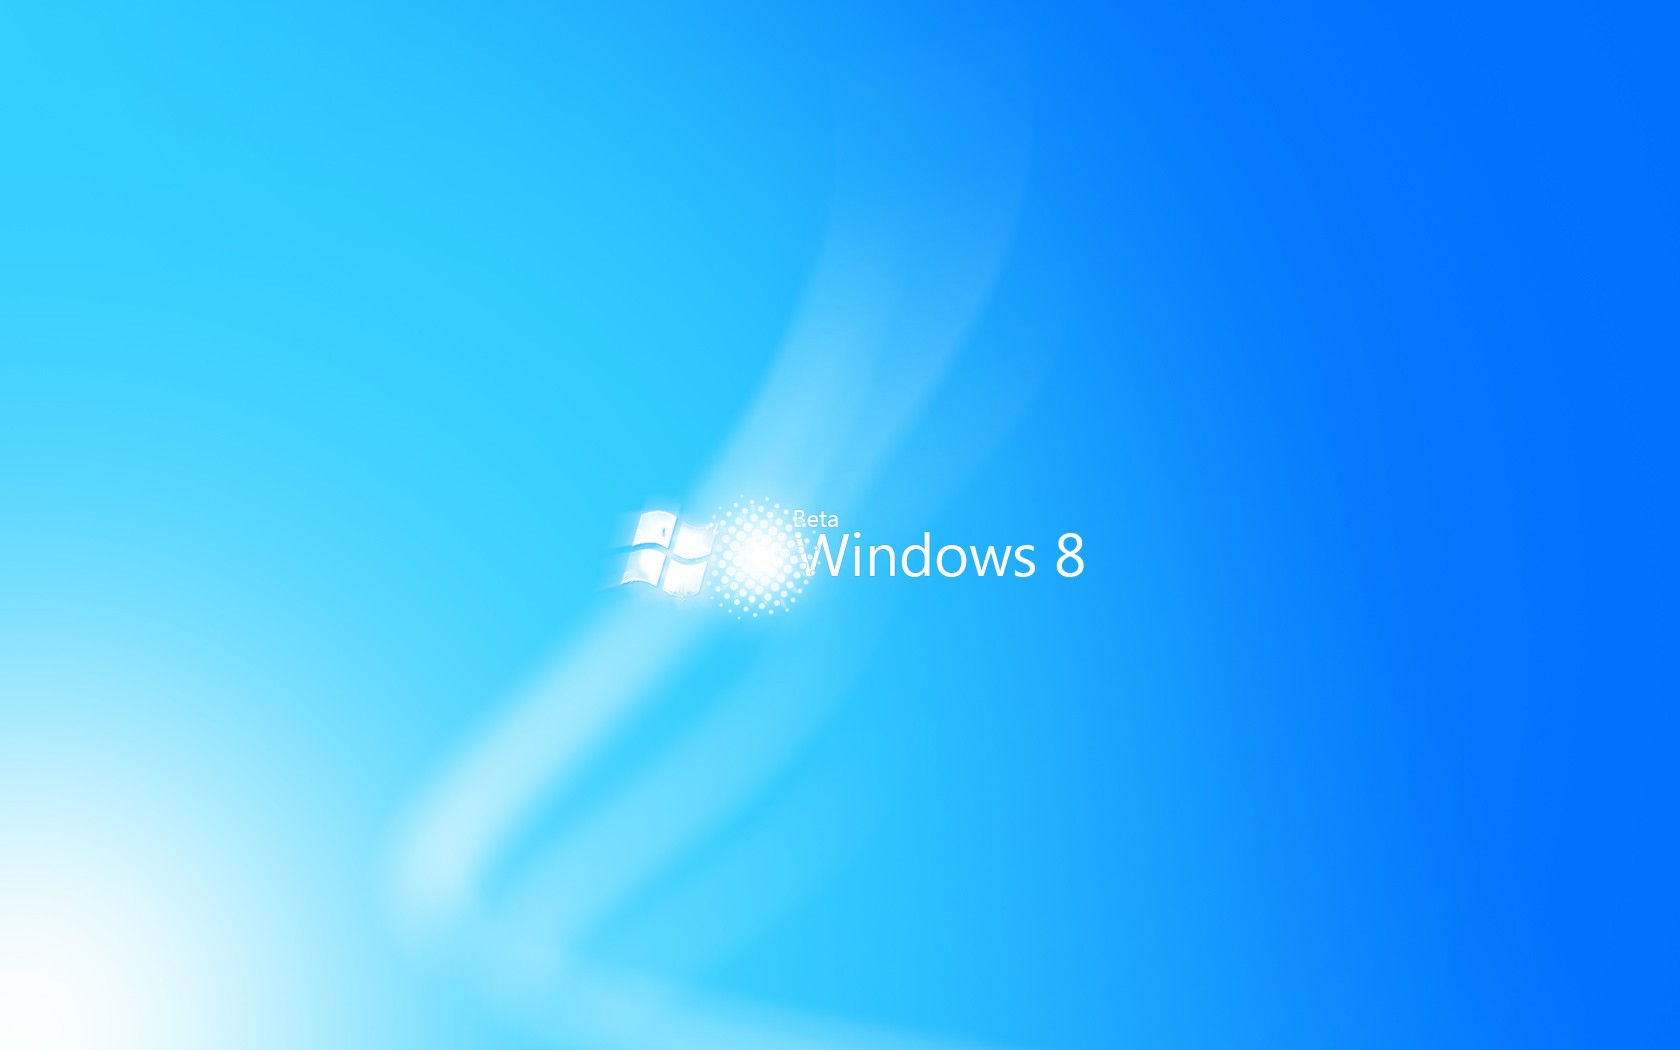 windows 8 wallpaper hd 1080p download #16